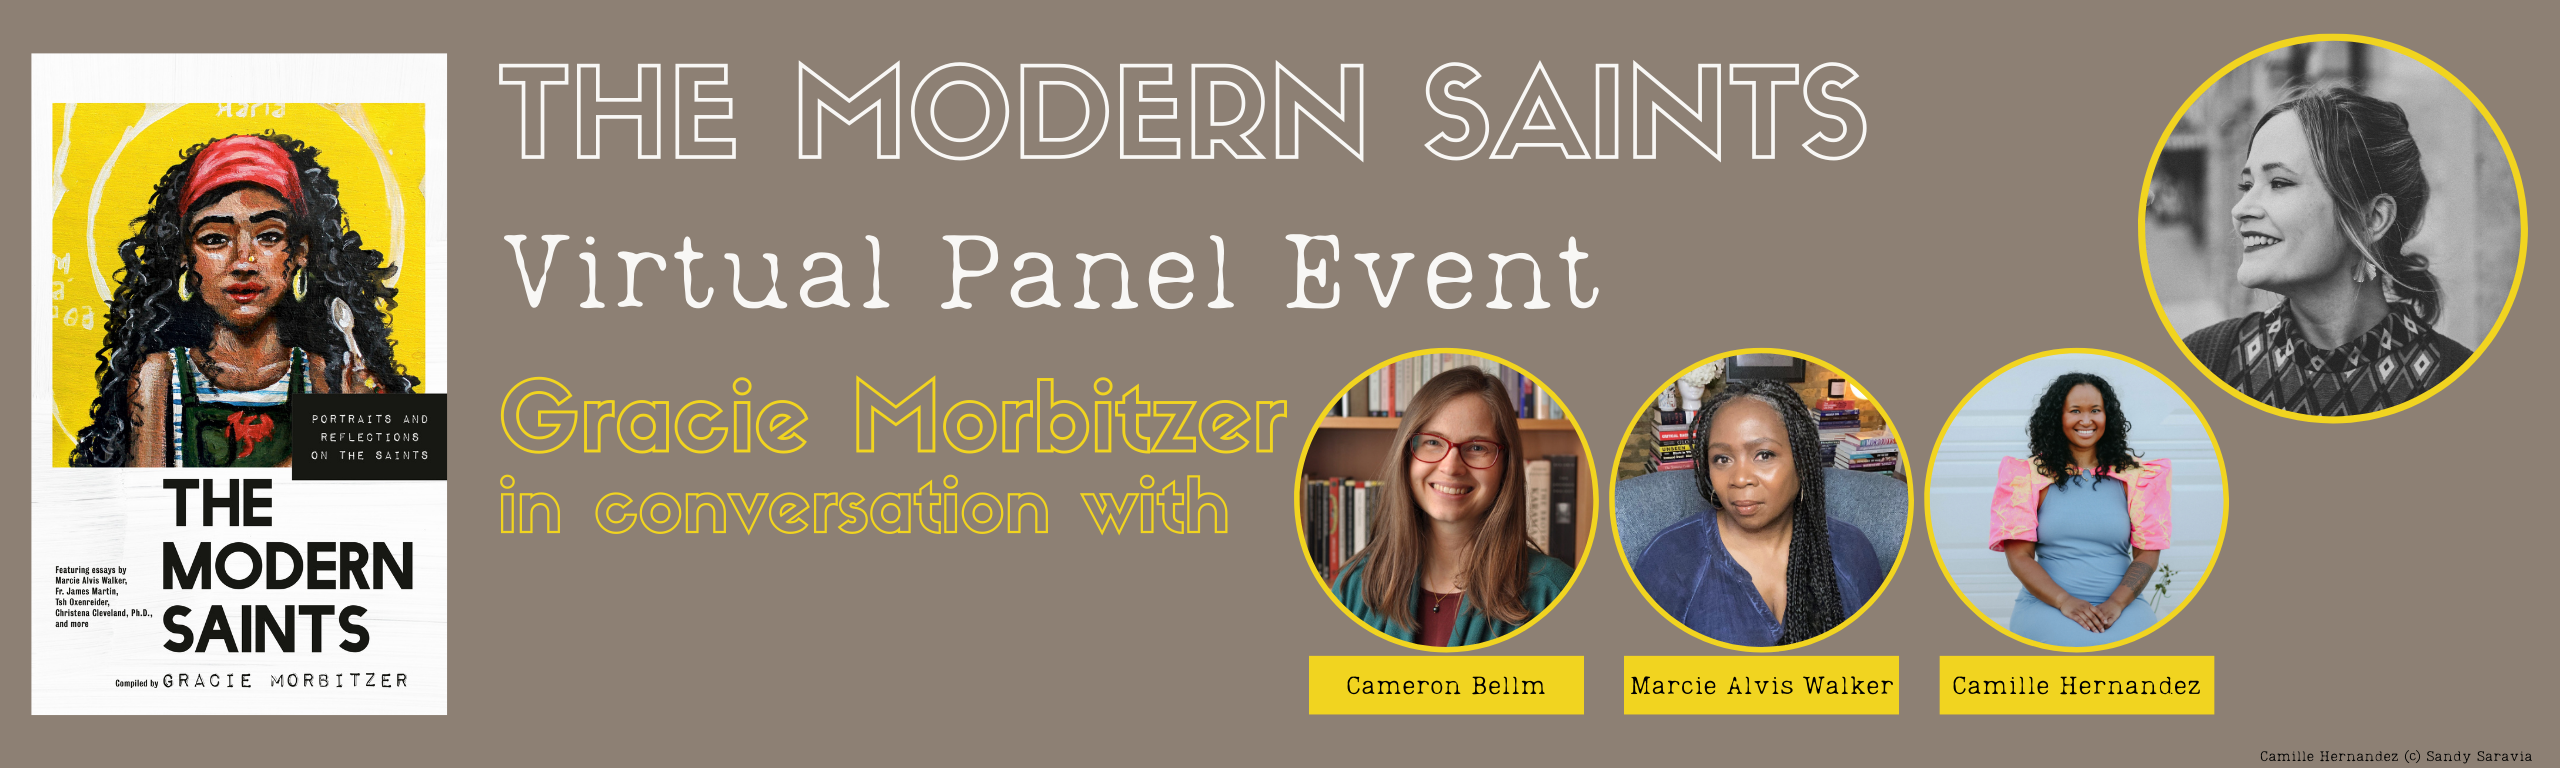 THE MODERN SAINTS Virtual Panel Event